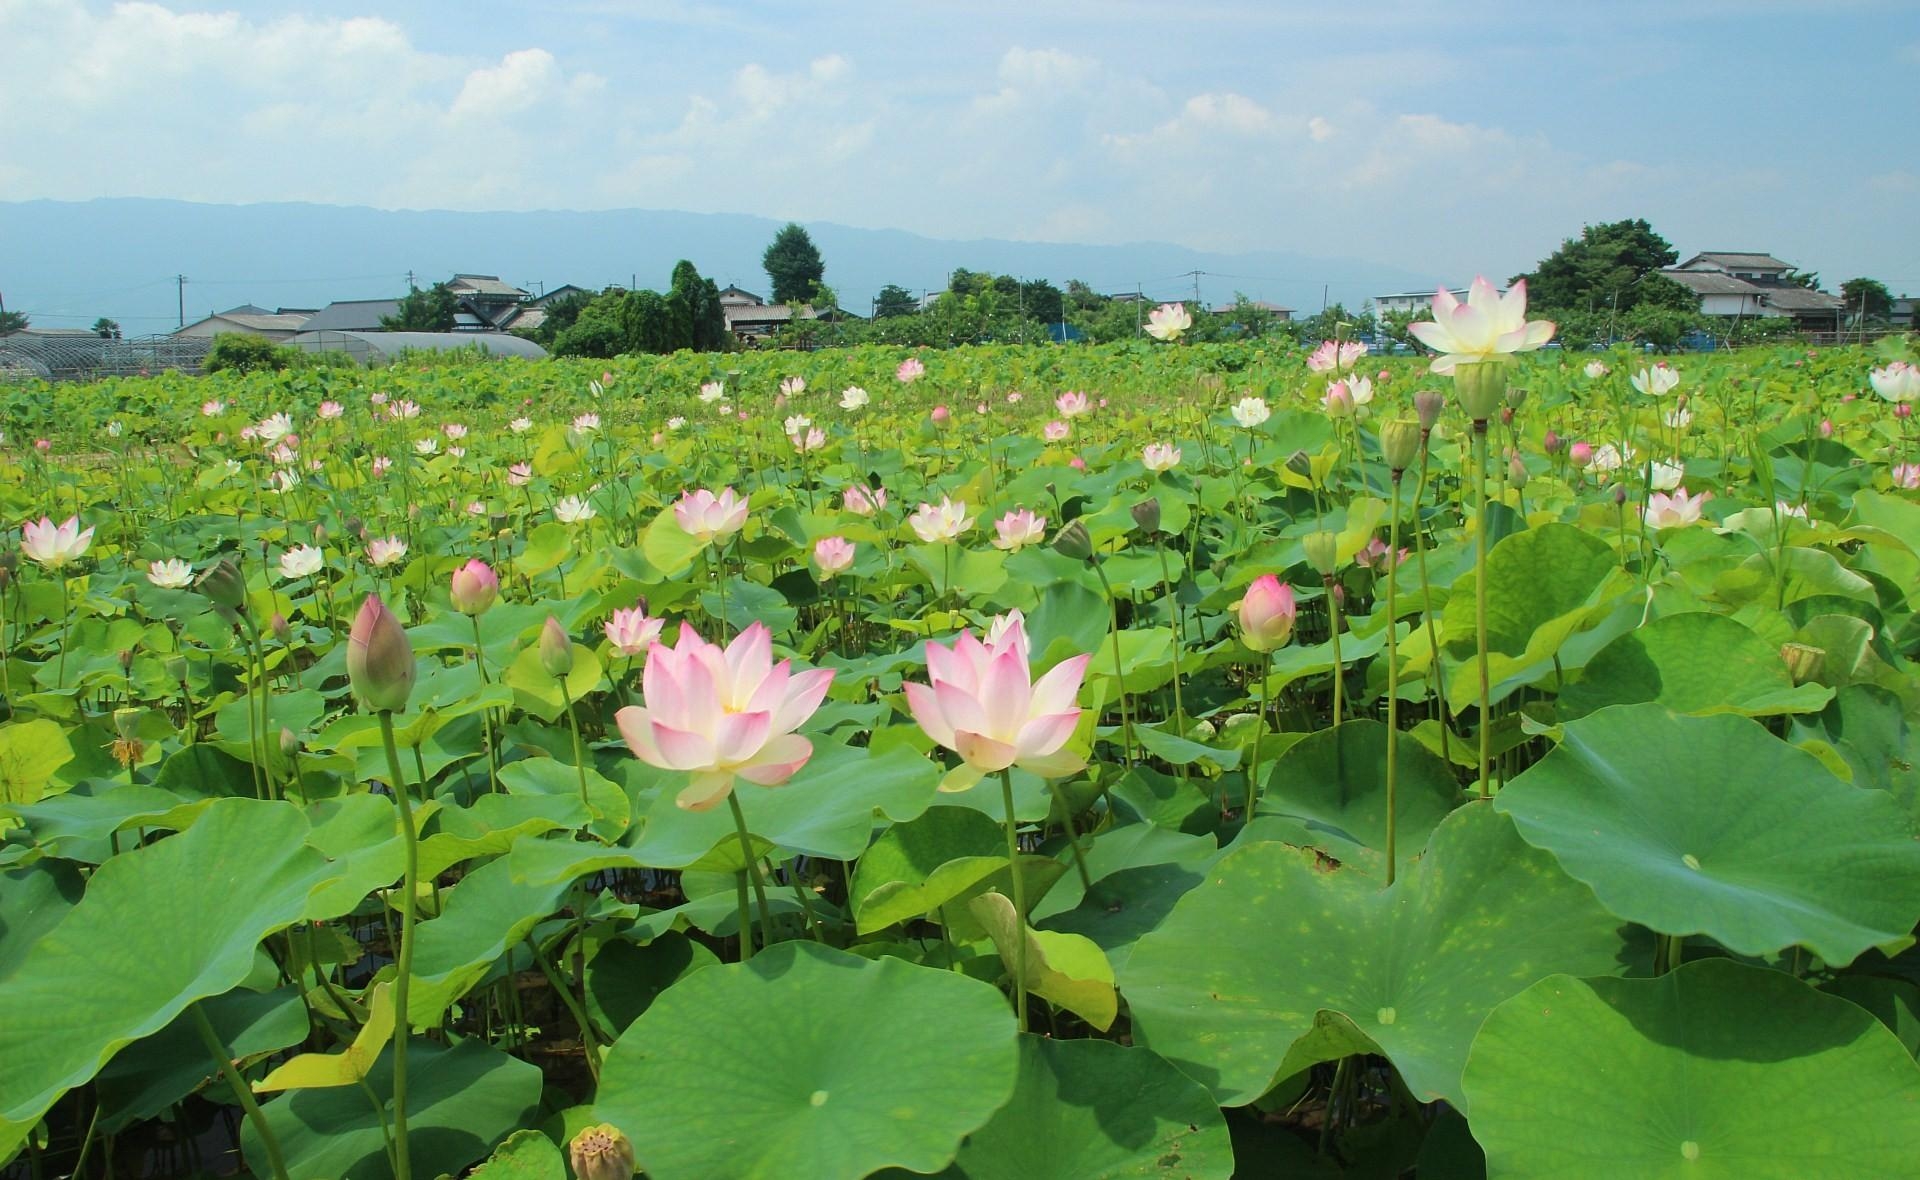 Lotuses grow in the field